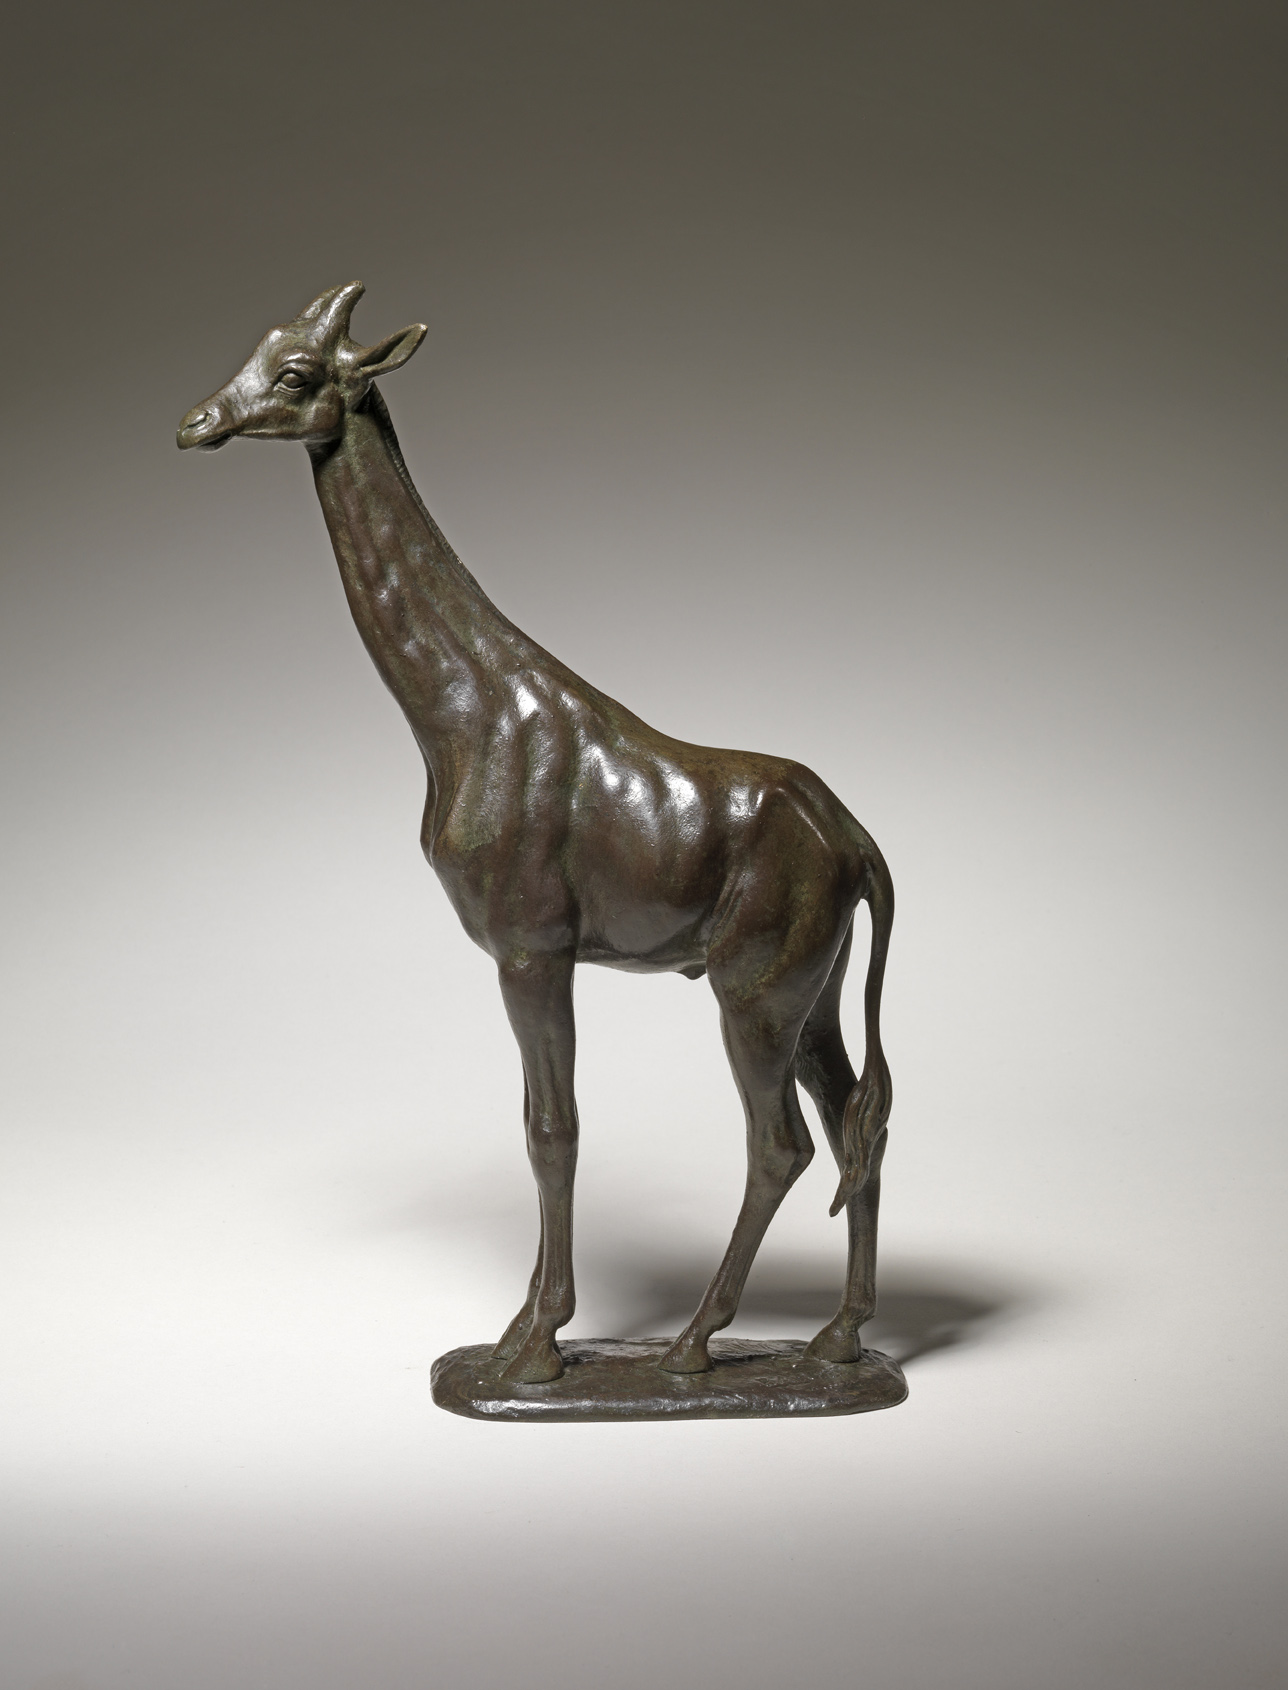 Giraffe, c. 1870